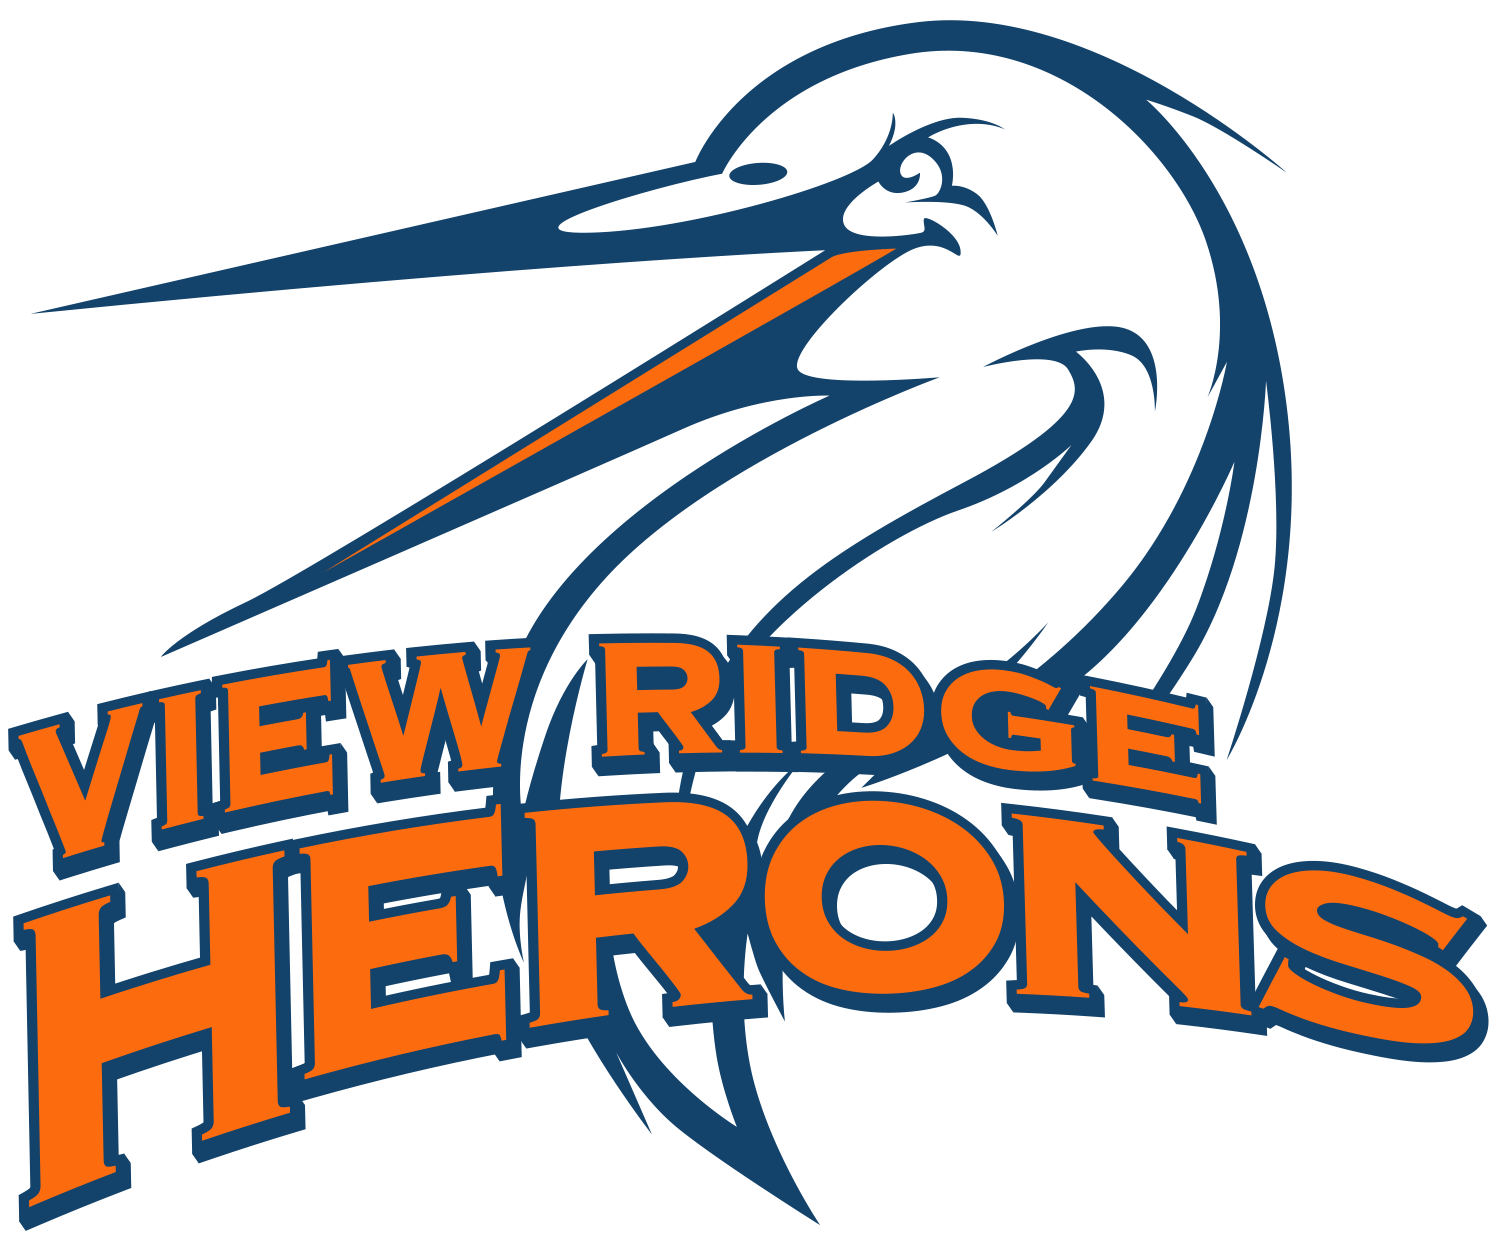 View Ridge Herons mascot